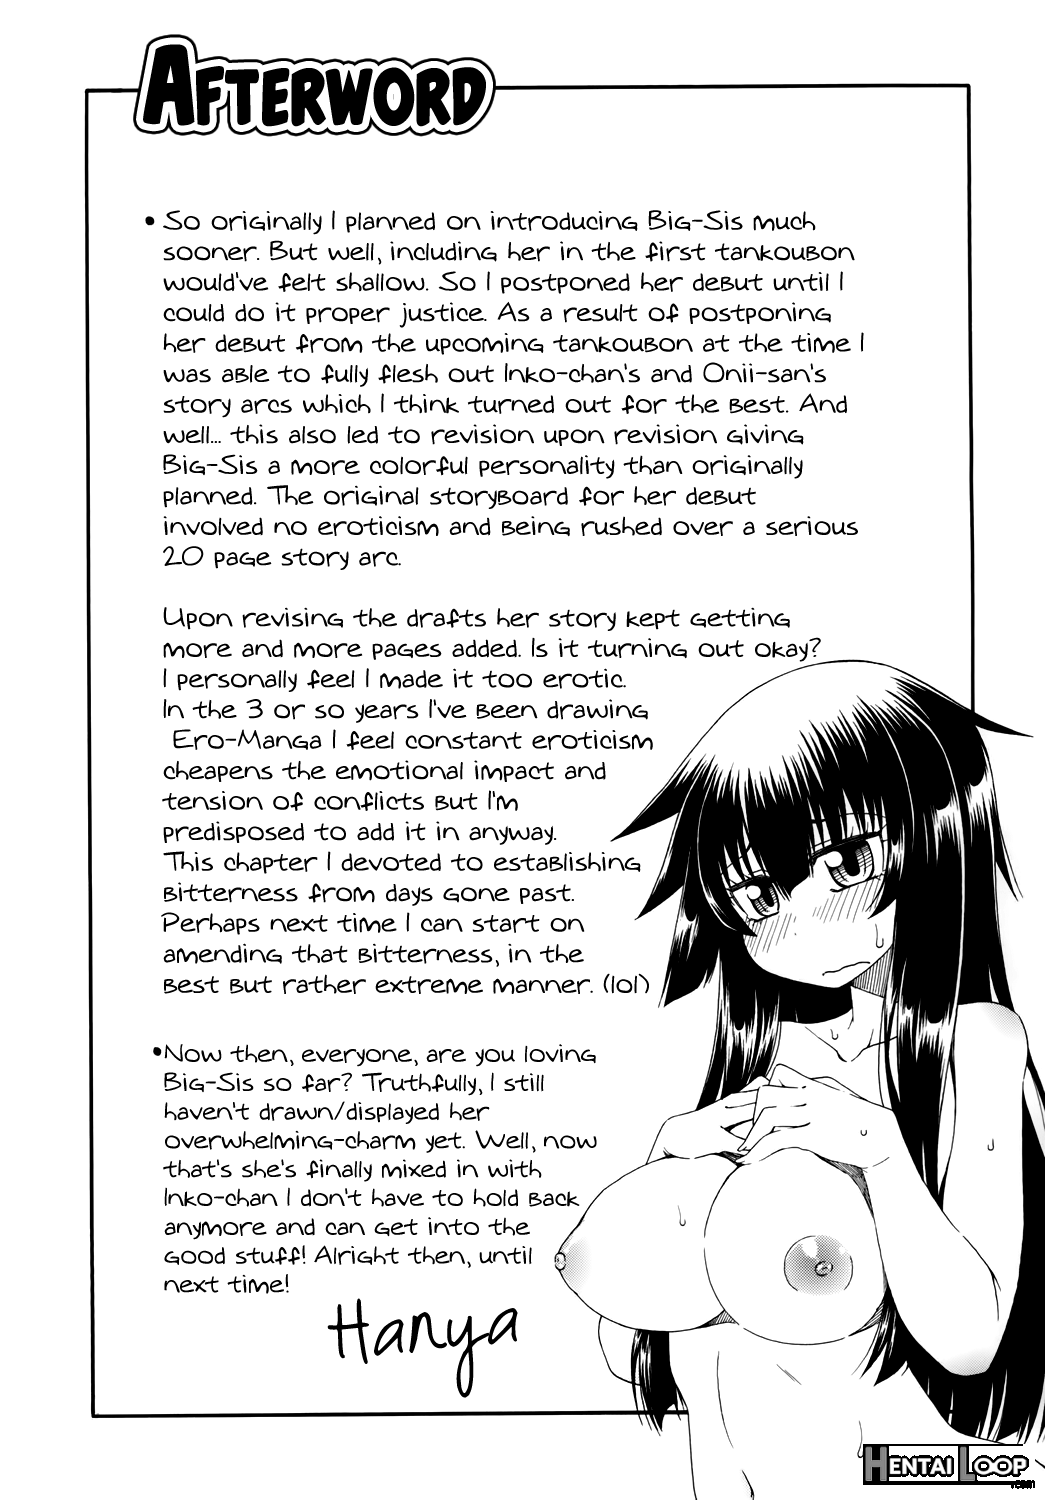 Yobae Inko-chan S2 page 16